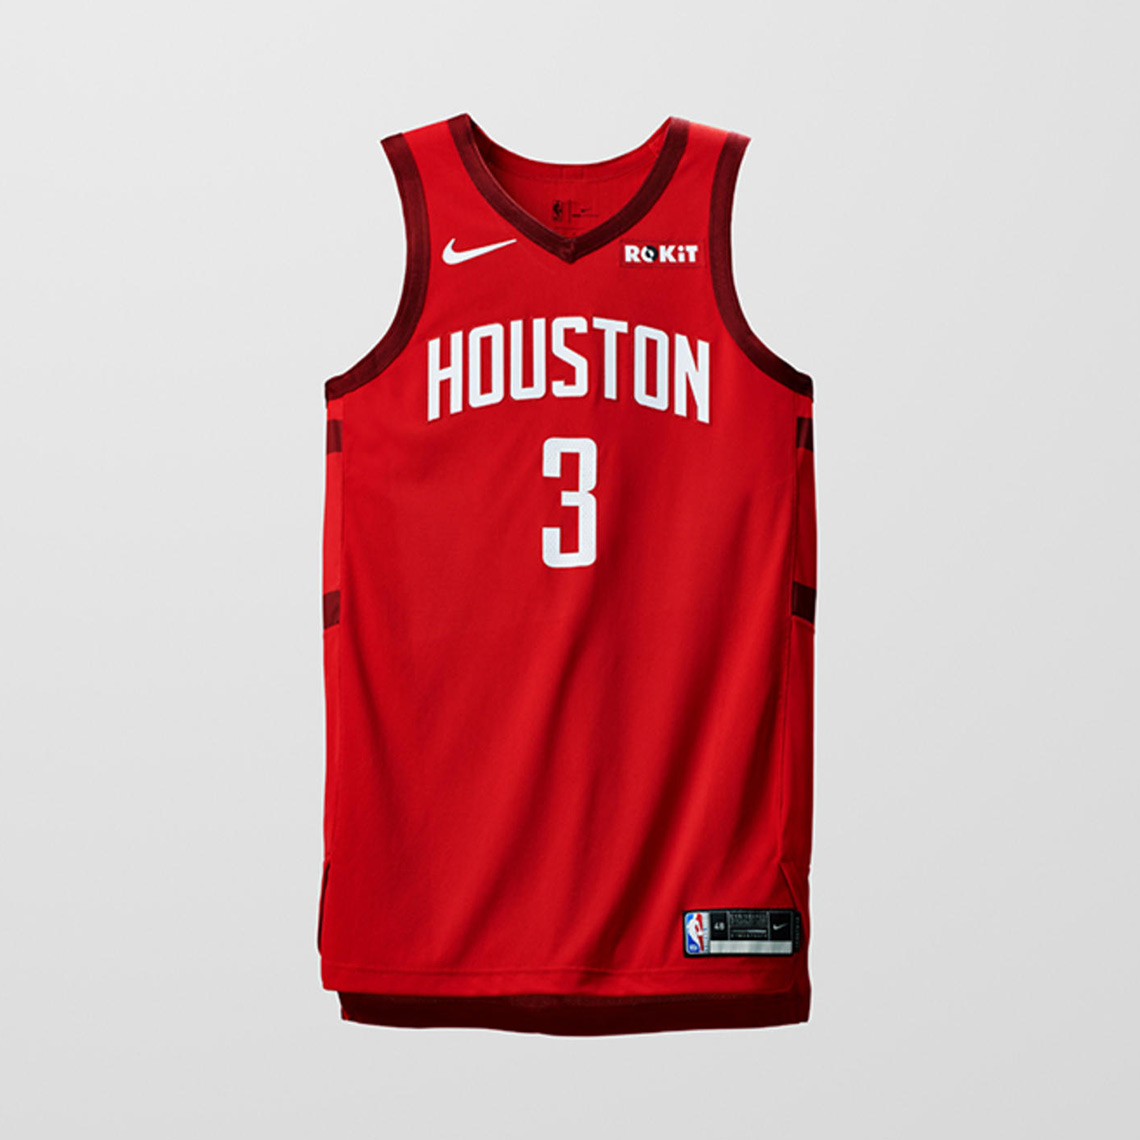 Nike NBA Earned Edition Jersey, SneakerNews.com